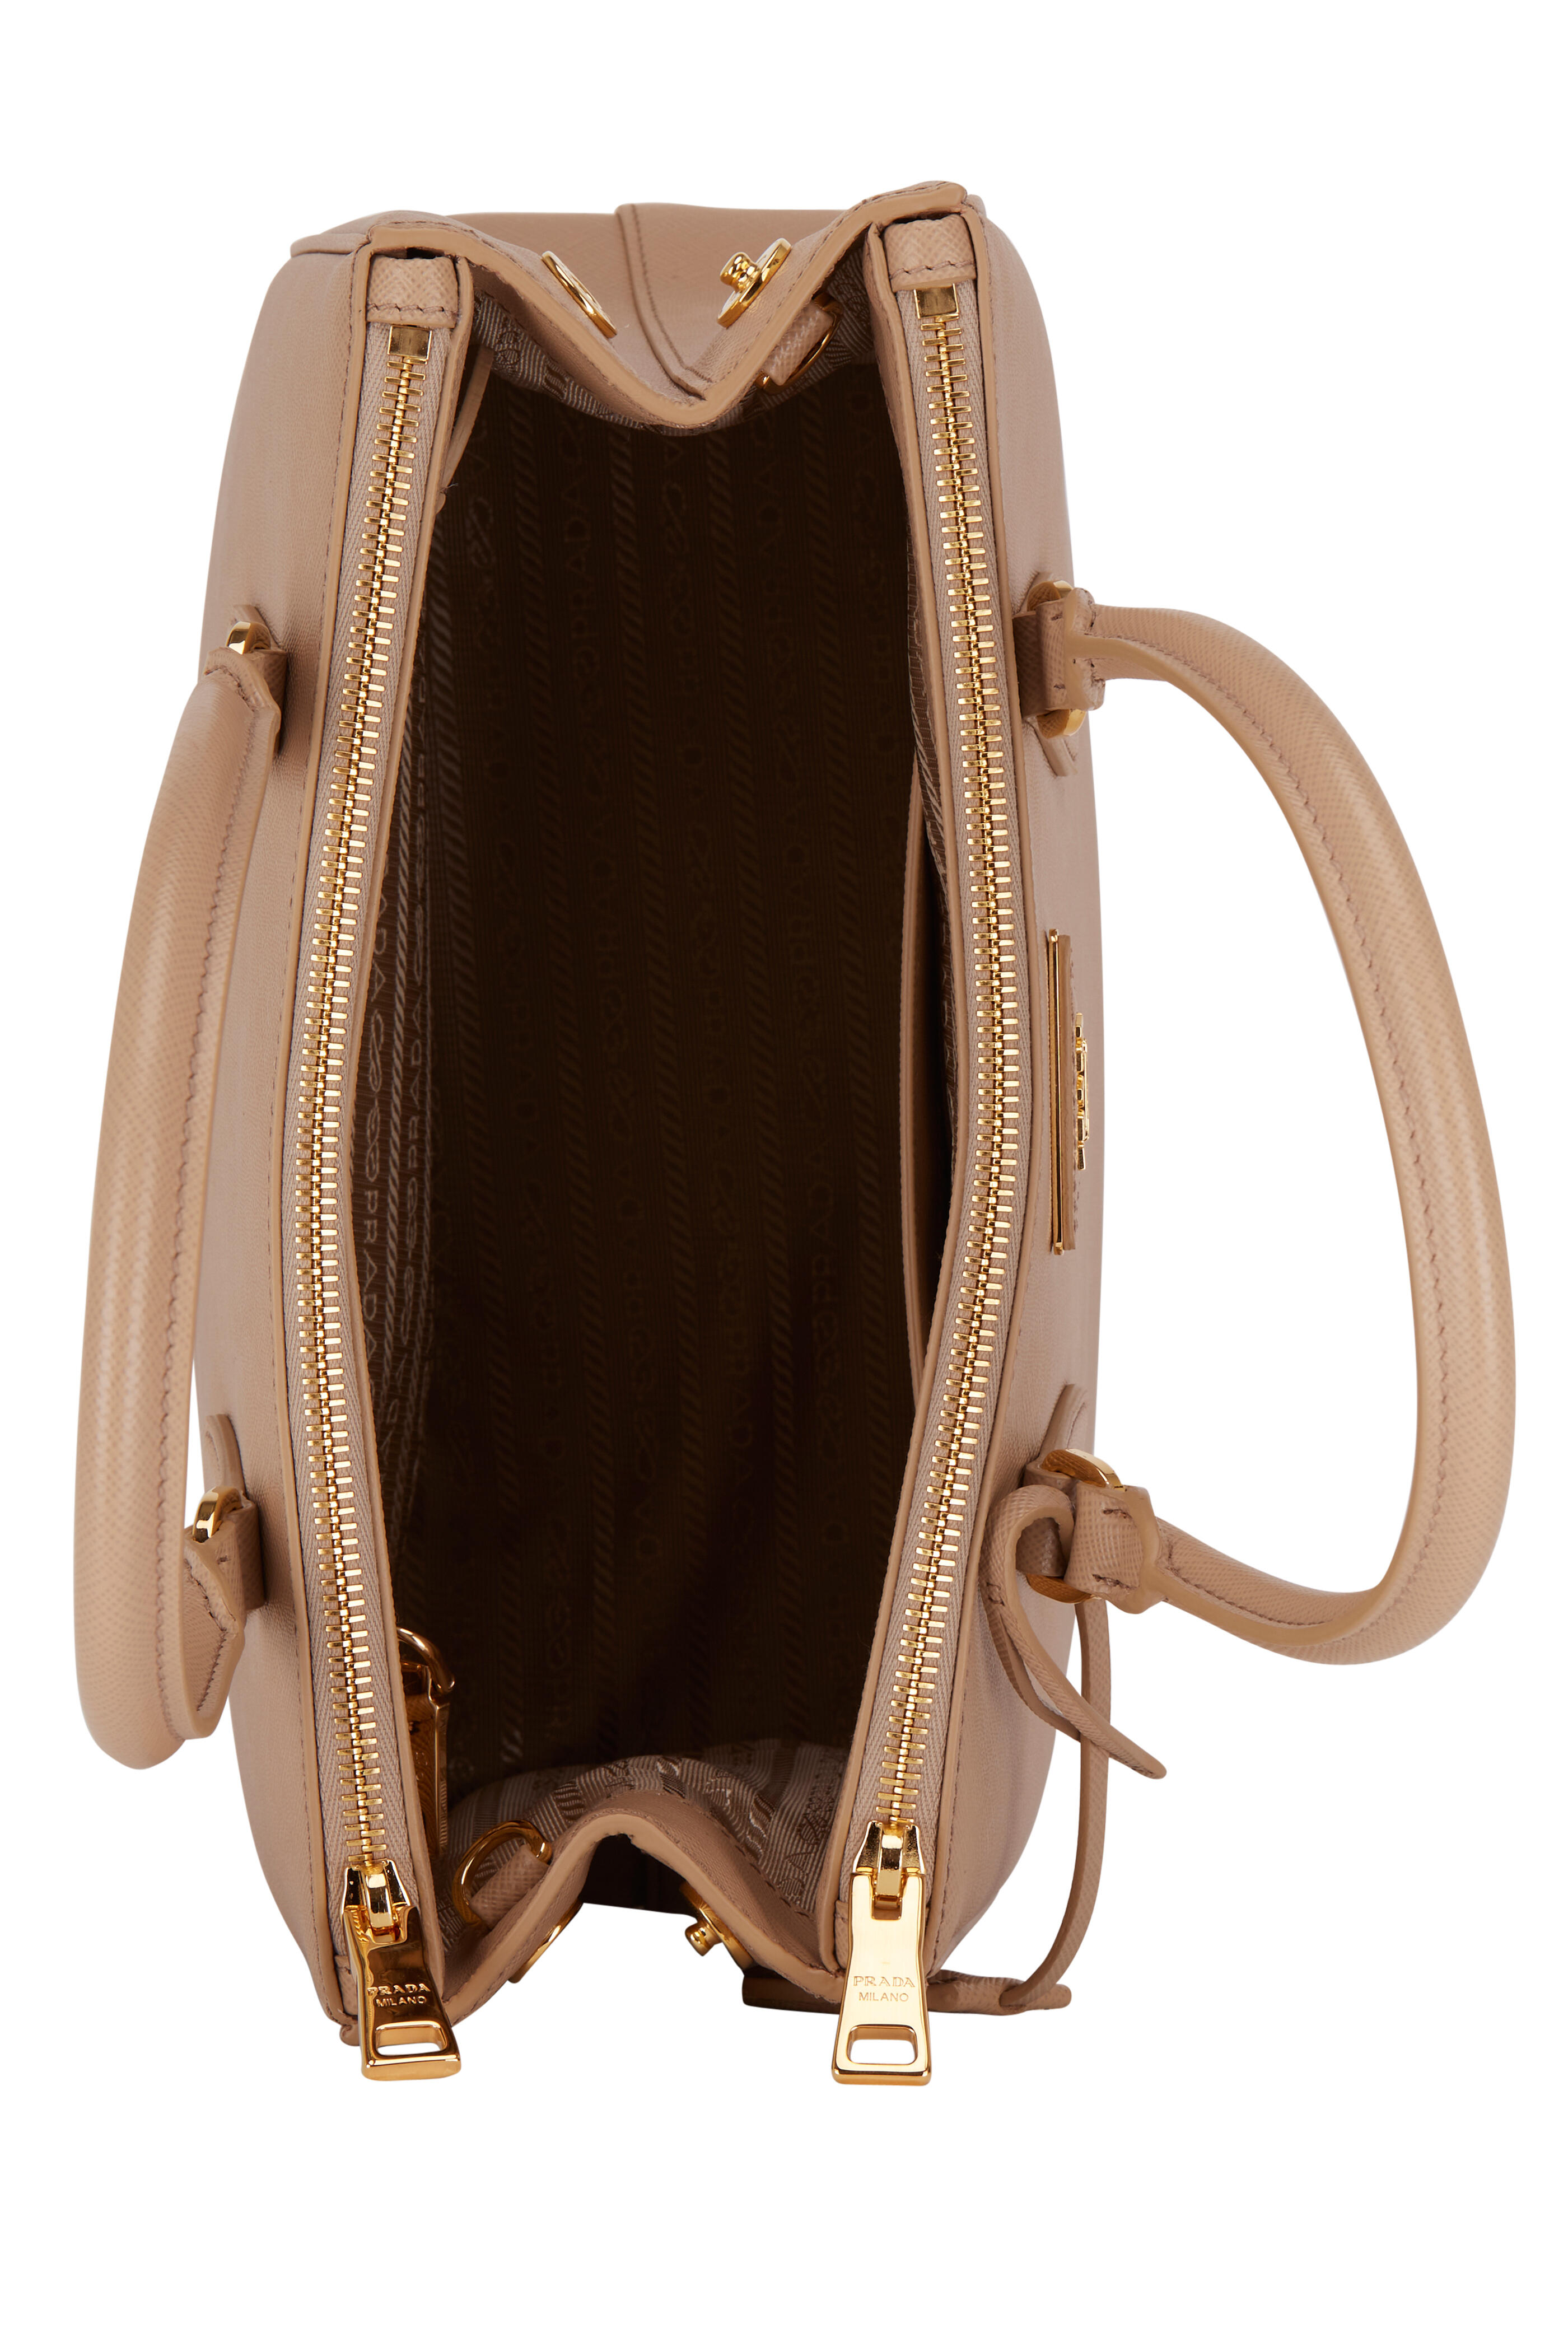 Prada Saffiano Lux Leather Messenger Bag Taupe